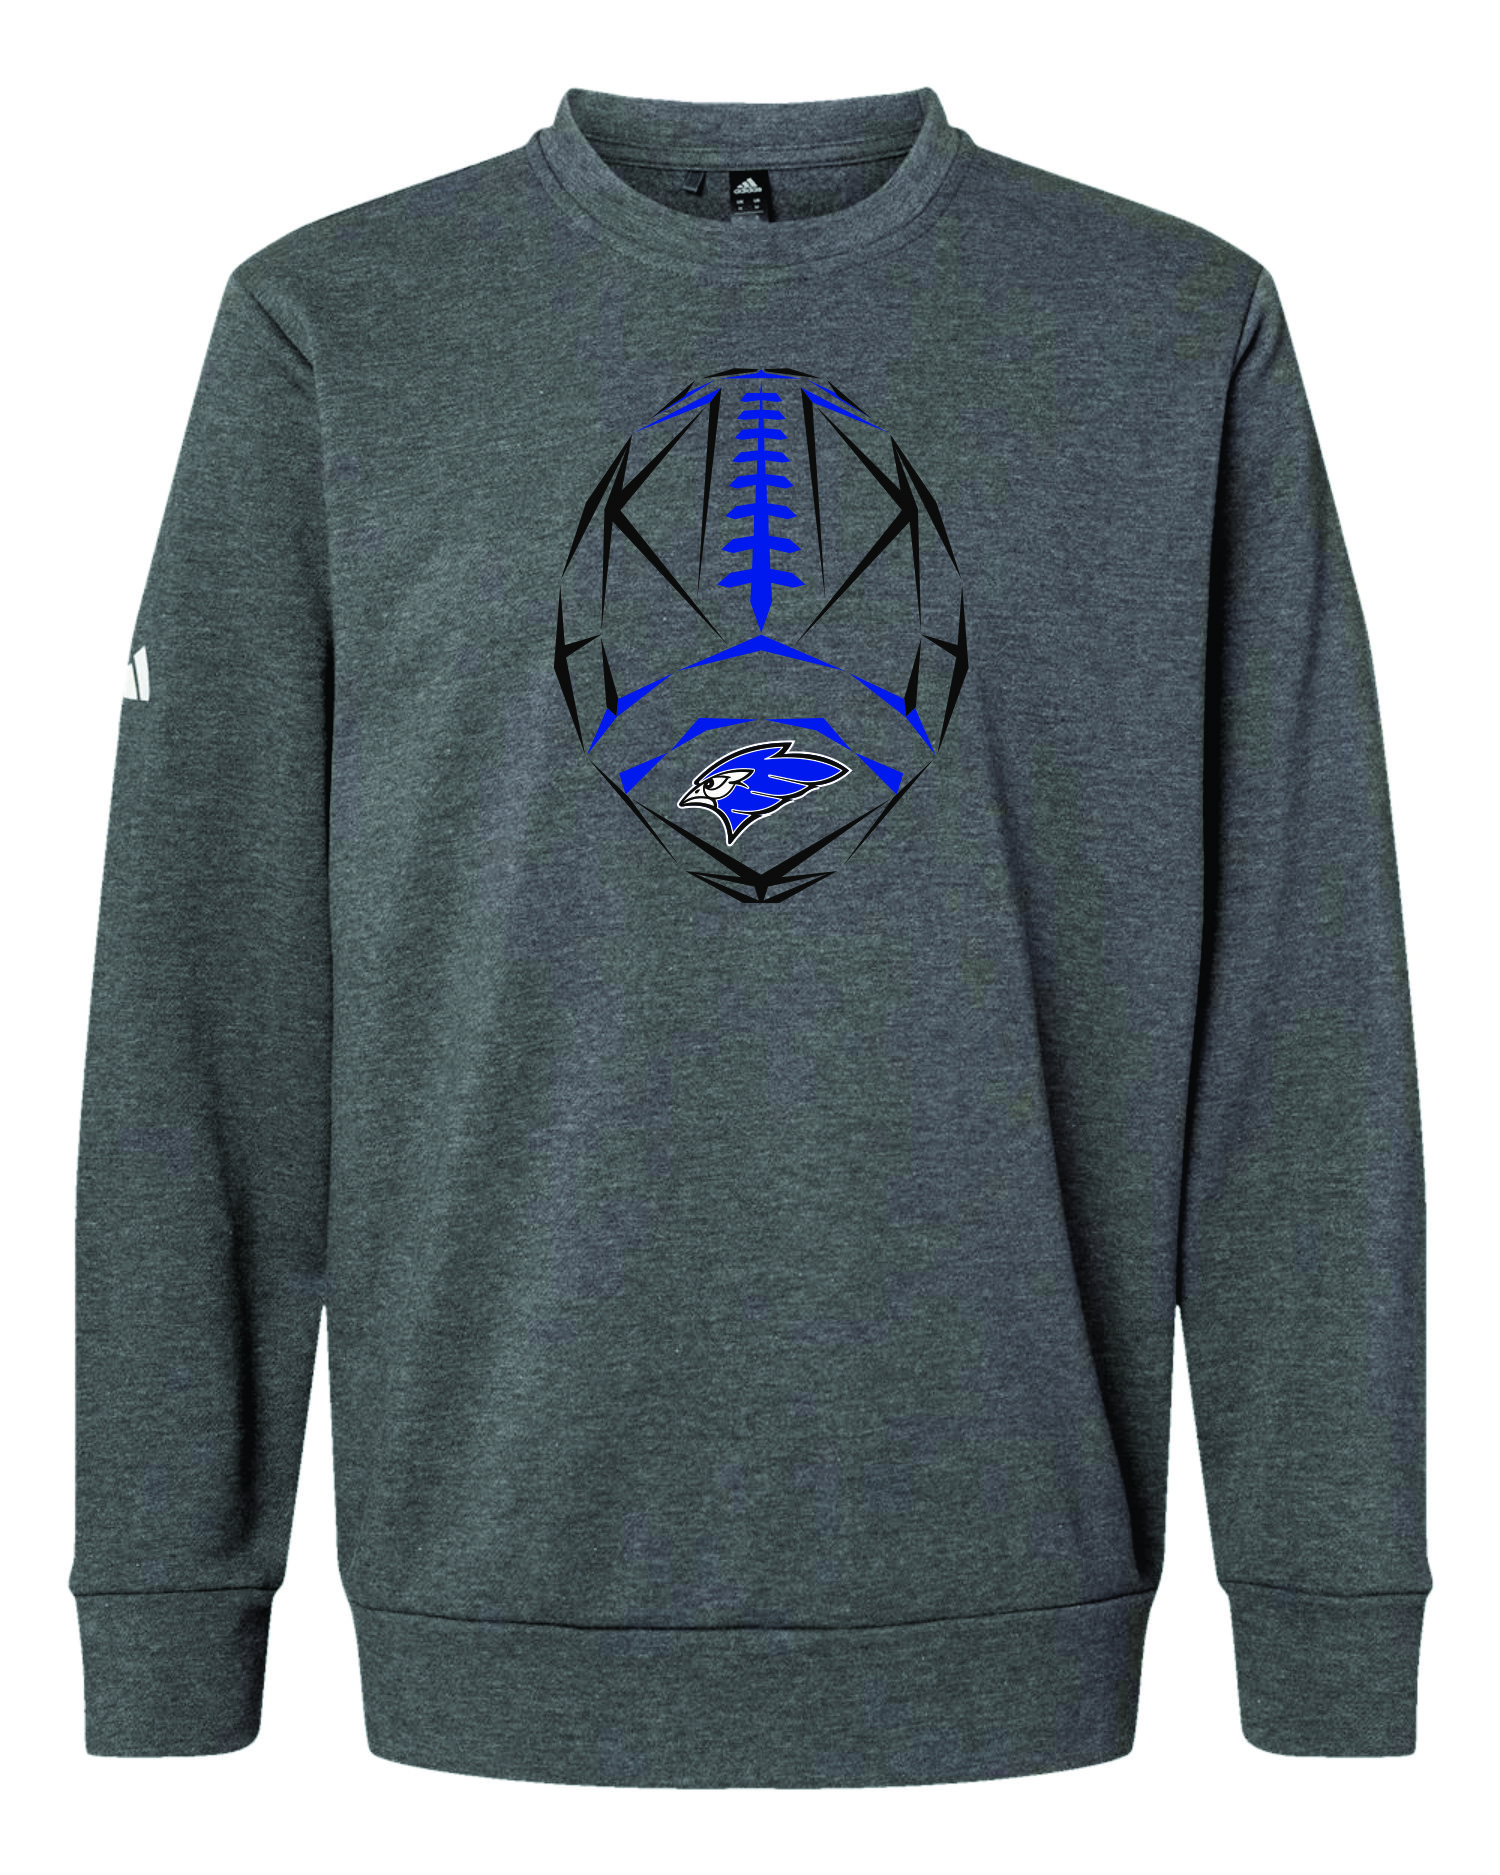 Blue Jay Football Grey) Unisex Benefit A434 Colby Crewneck Fleece - (Dark Adidas Orriginals Sweatshirt